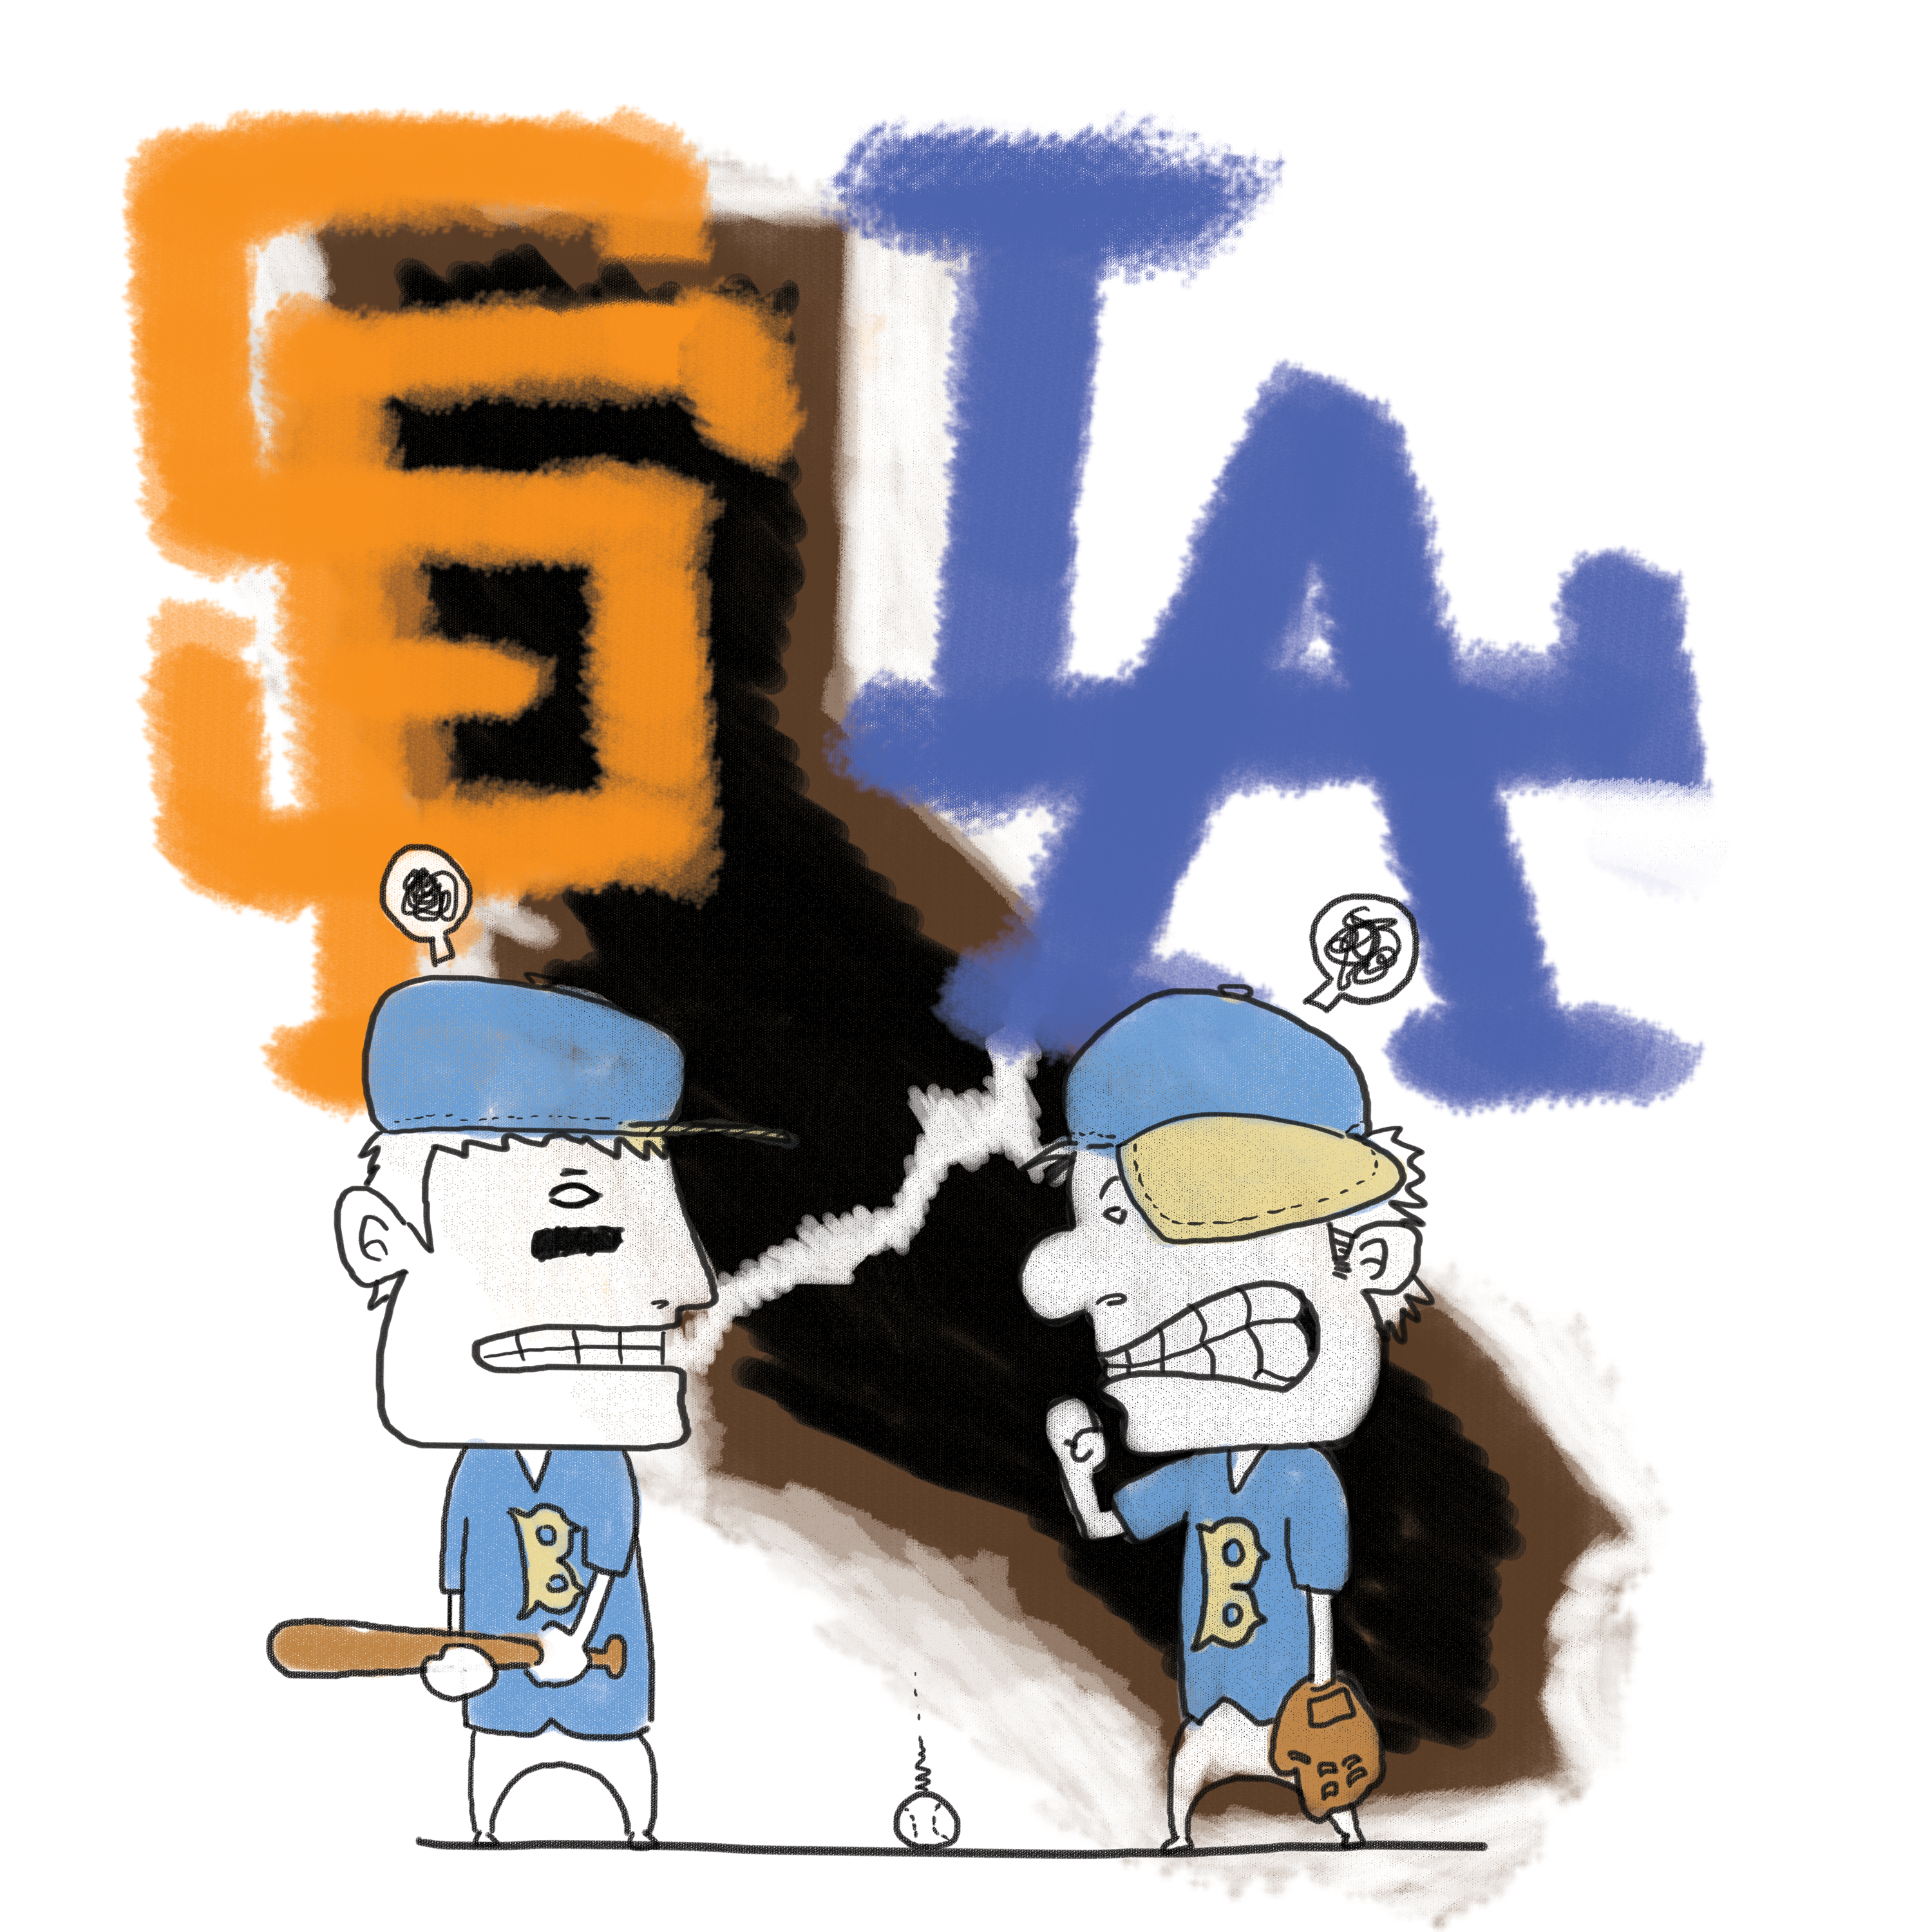 Dodgers-Giants rivalry! Beat LA! #SFGiants #BeatLA